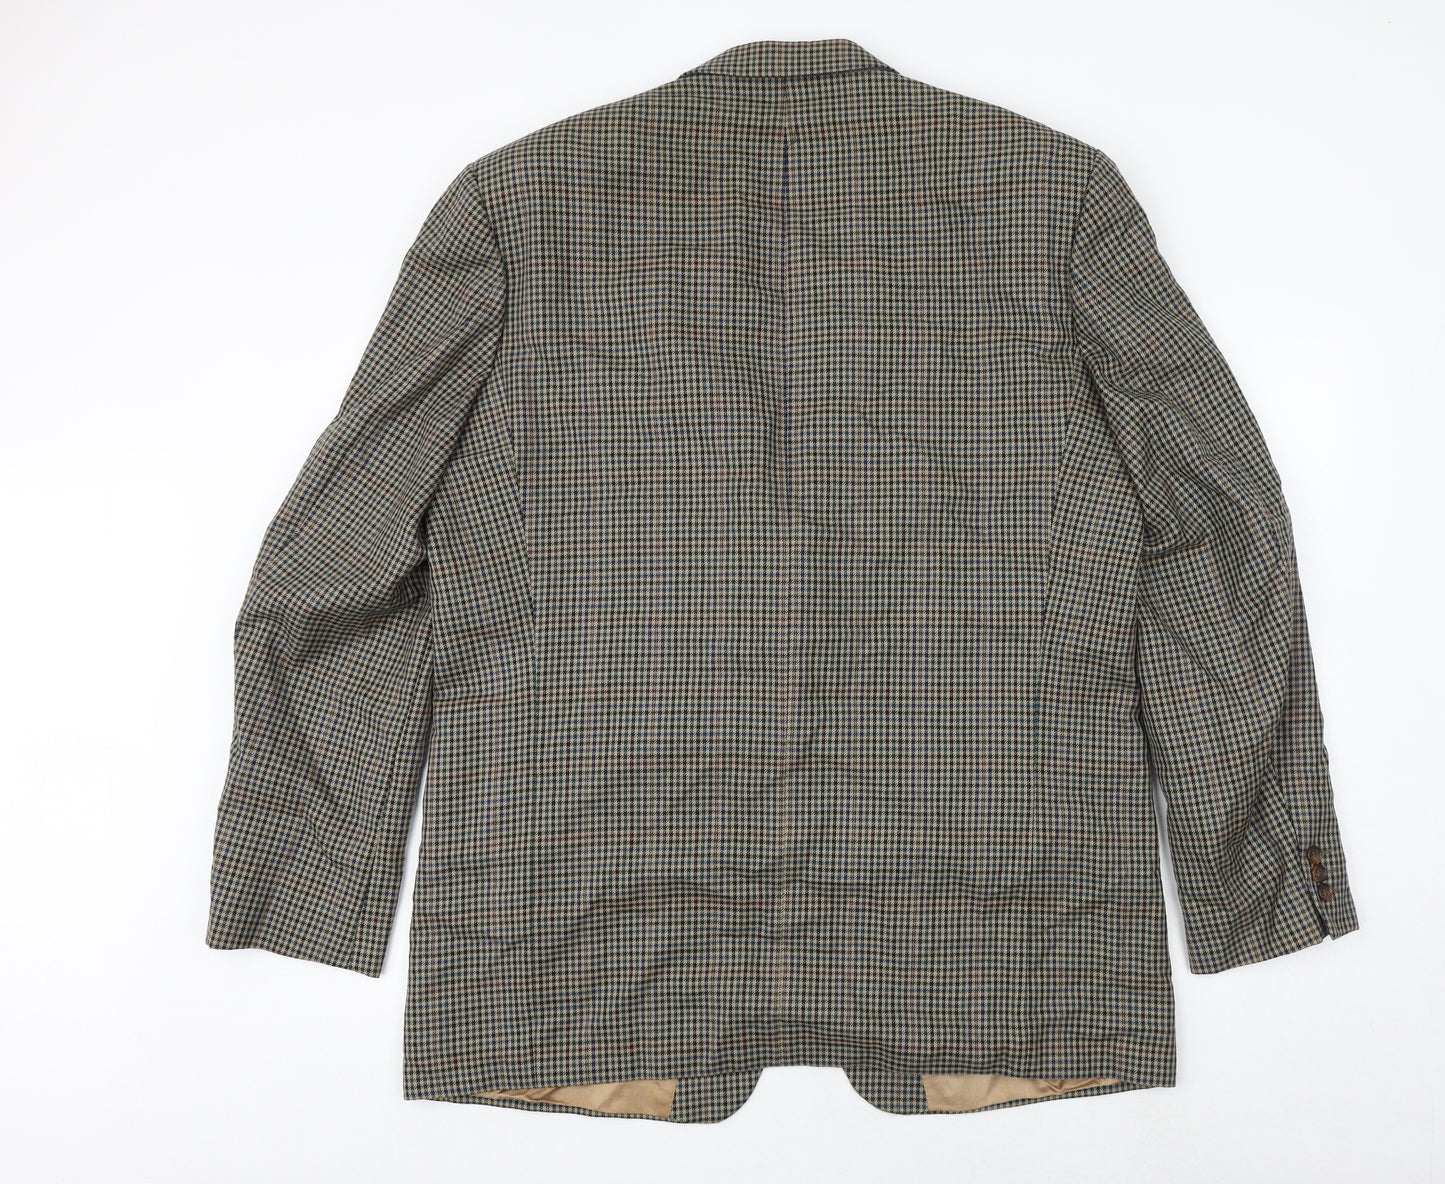 Burton Mens Brown Geometric Wool Jacket Blazer Size 46 Regular